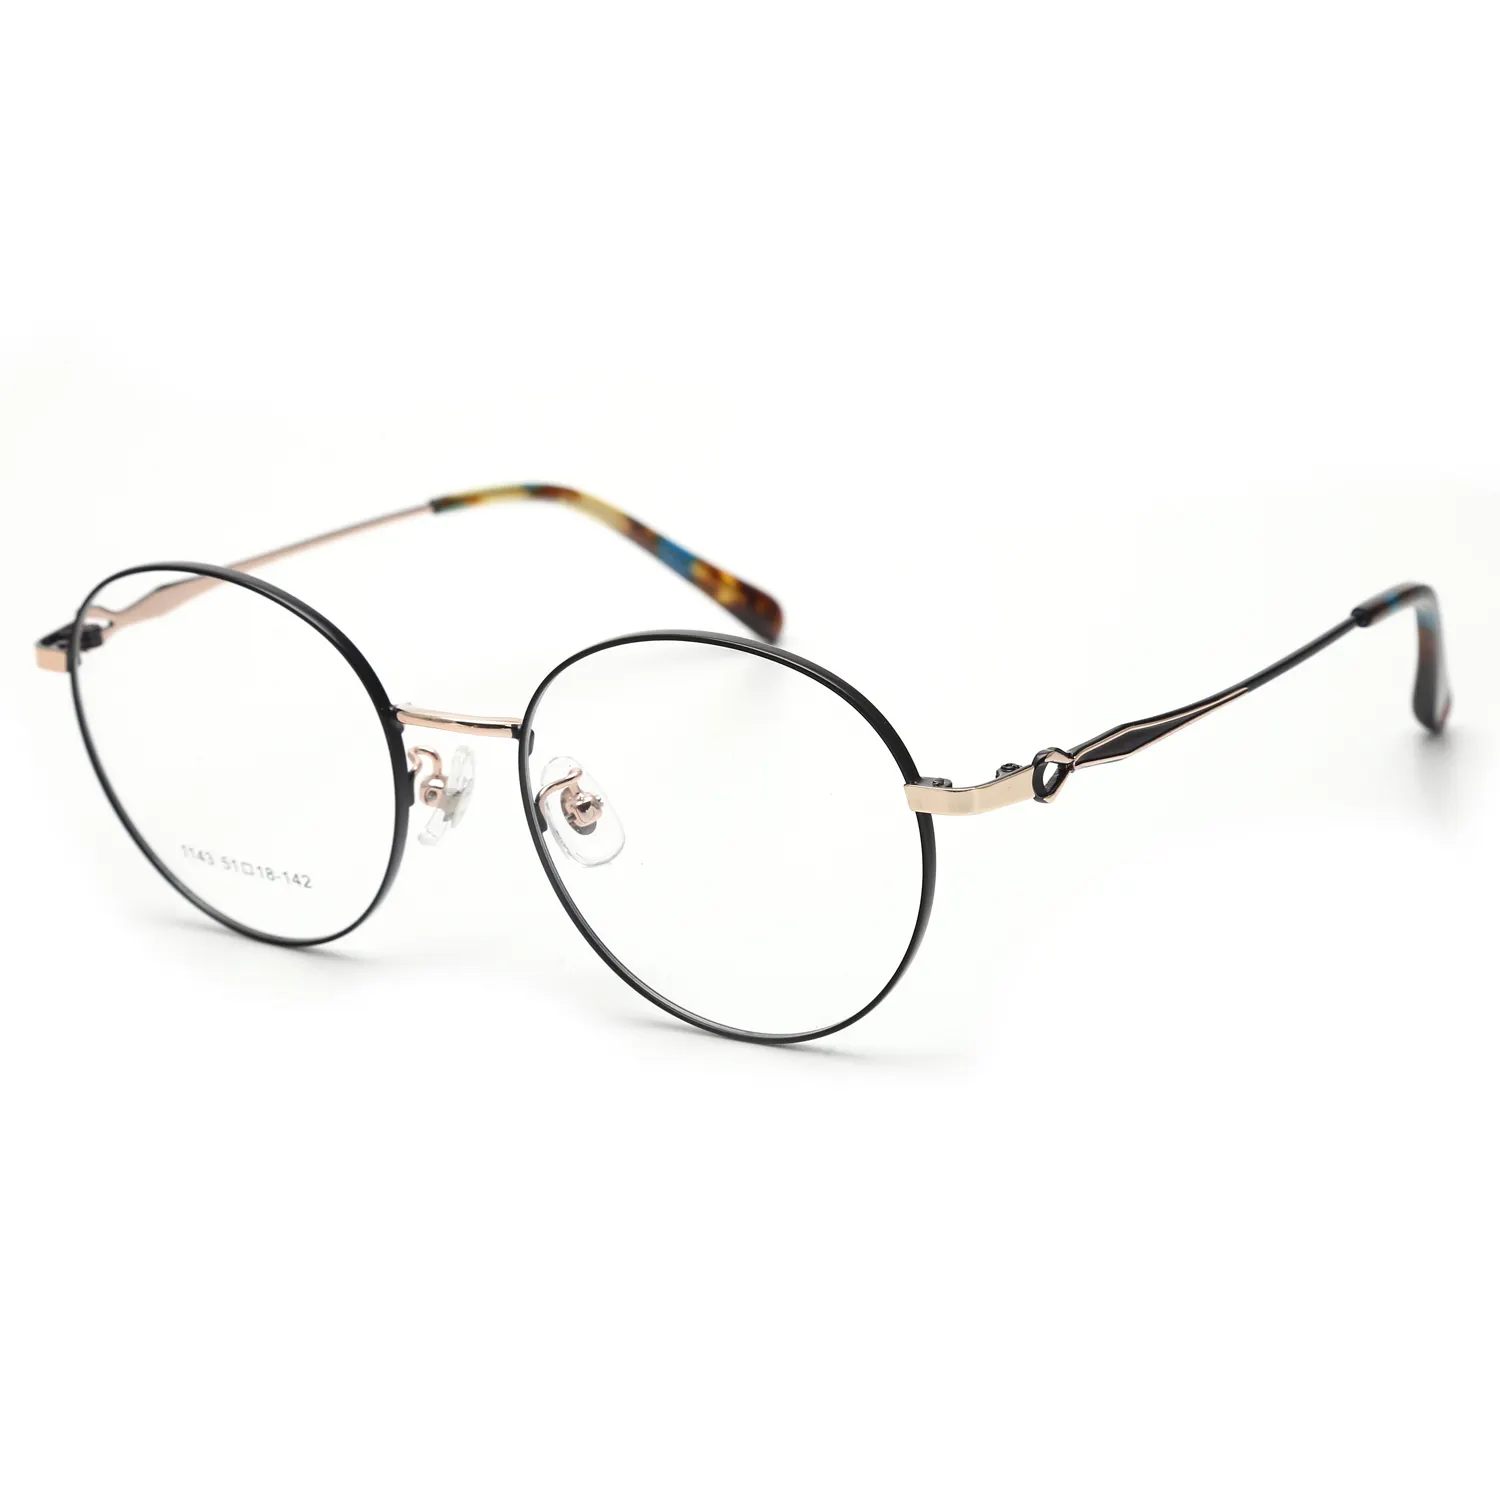 1143 New Vintage Round Glasses Frame Women titanium Small Circle Shape Eyewear Clear Optical Eyeglasses Spectacle